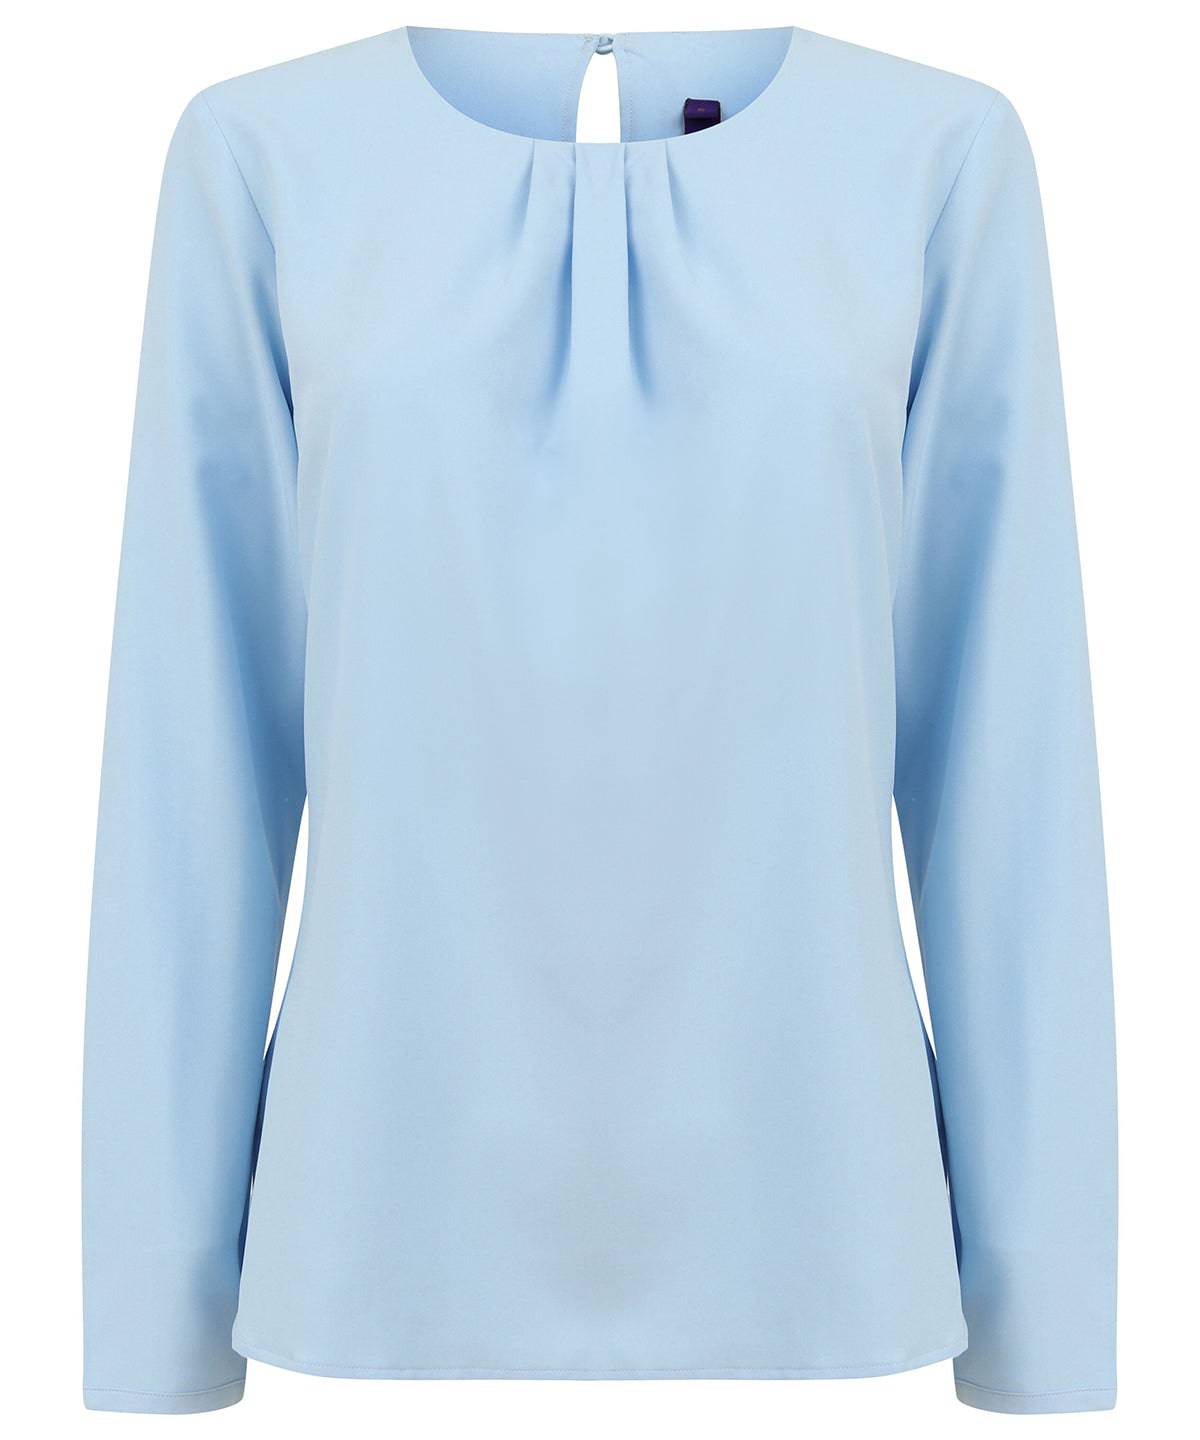 Light Blue - Women's pleat front long sleeve blouse